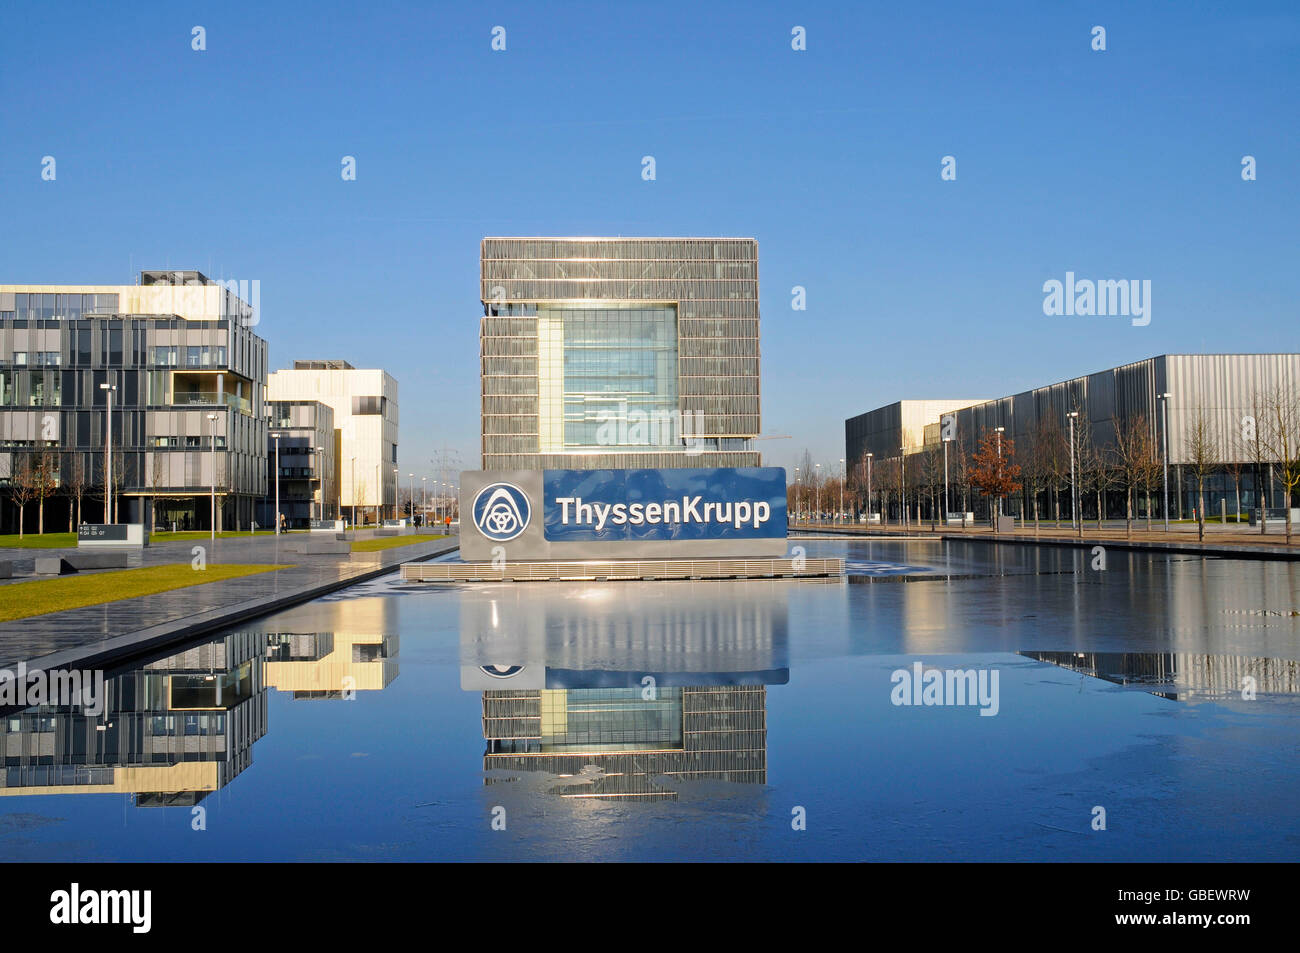 ThyssenKrupp, headquarters, North Rhine-Westphalia, Essen, Germany / Thyssen Krupp, Krupp town, steel industry, logo Stock Photo